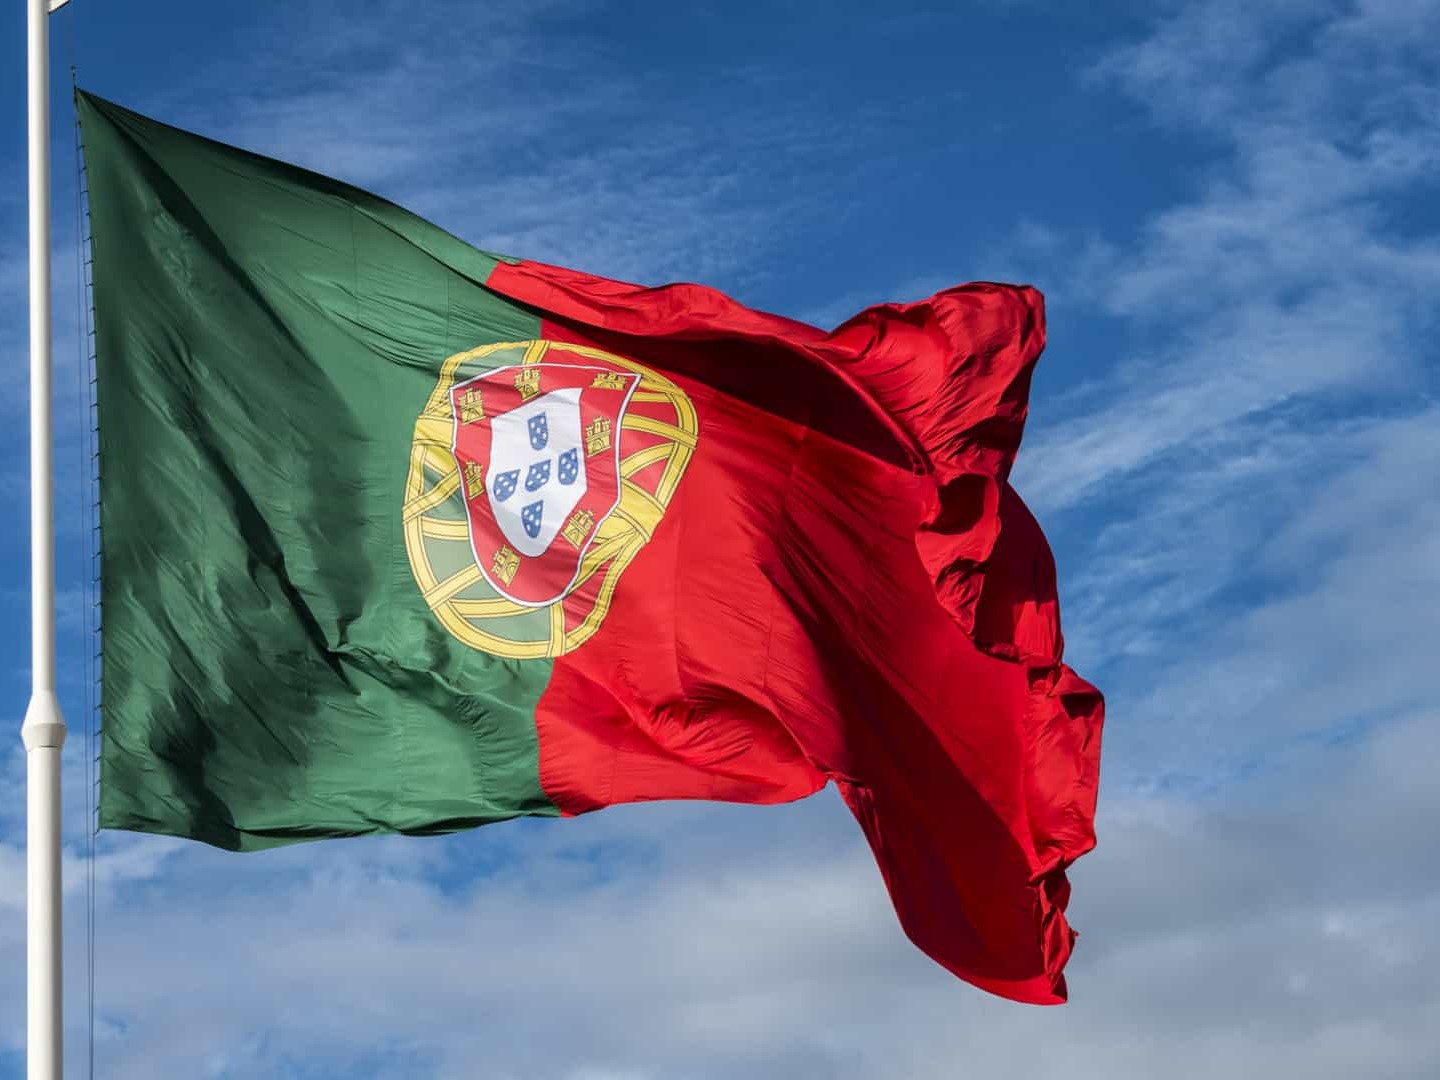  JN Moura Inaugura Filial em Lisboa